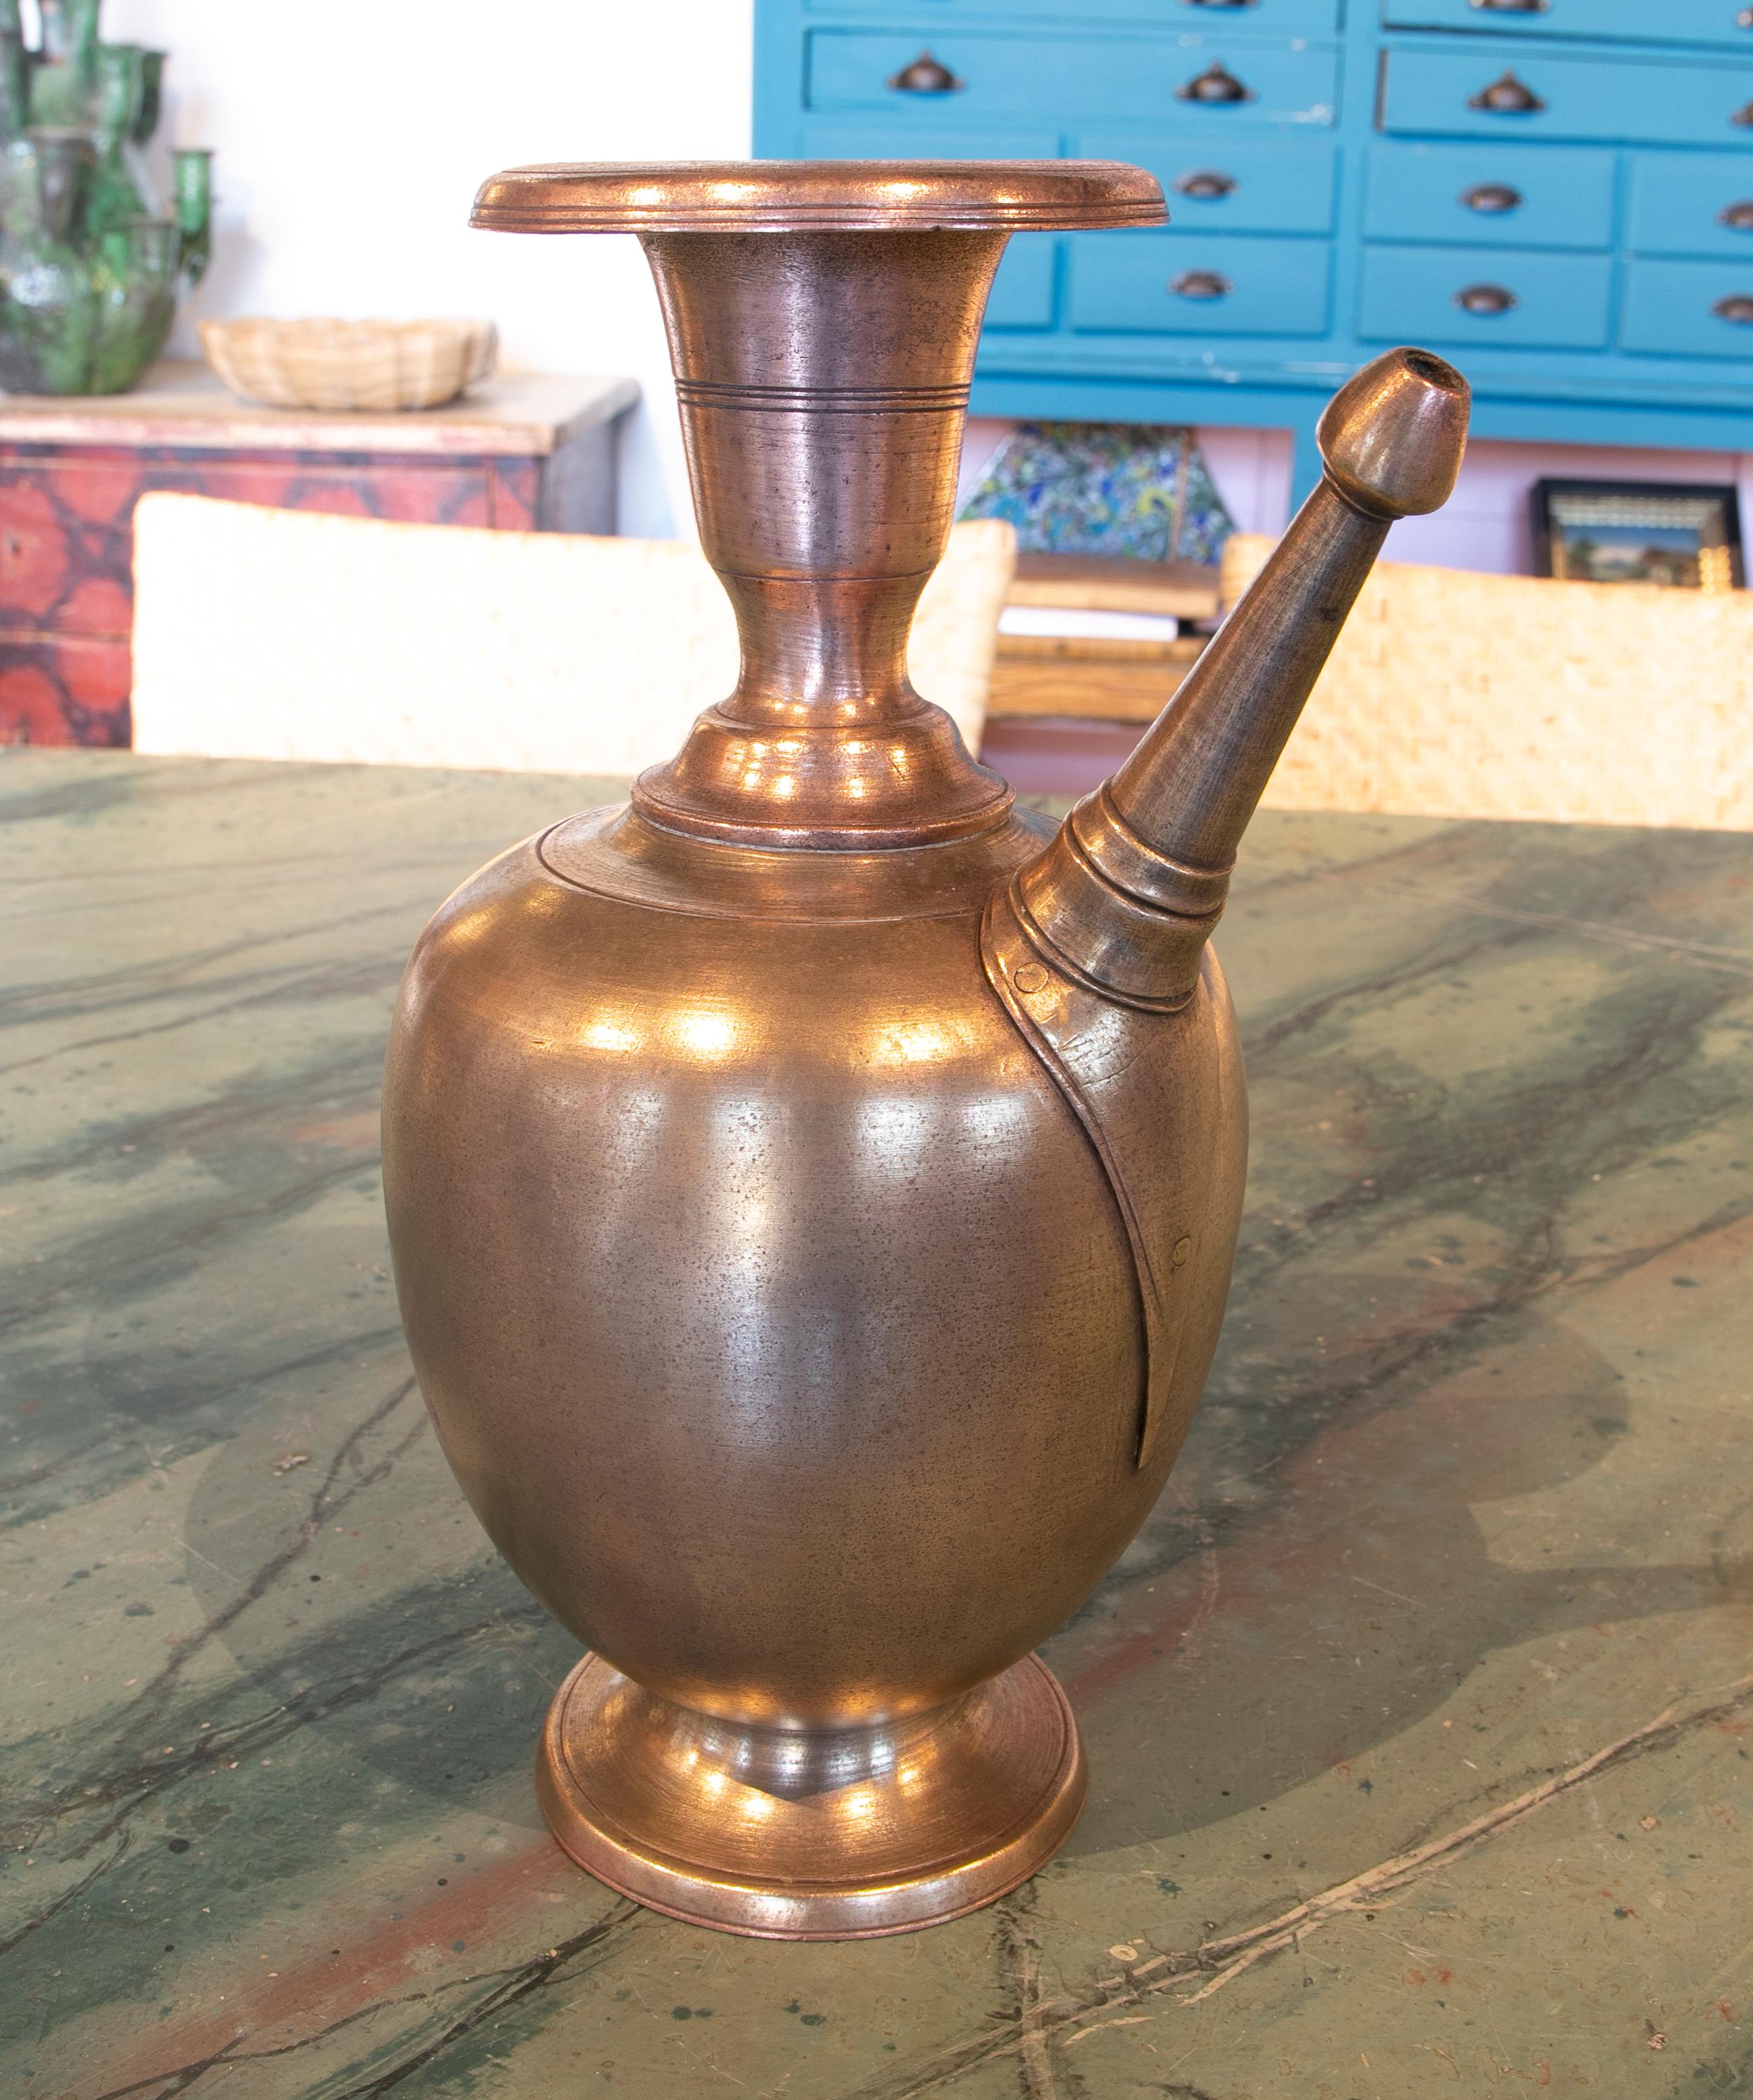 1930s indu bronze teapot.